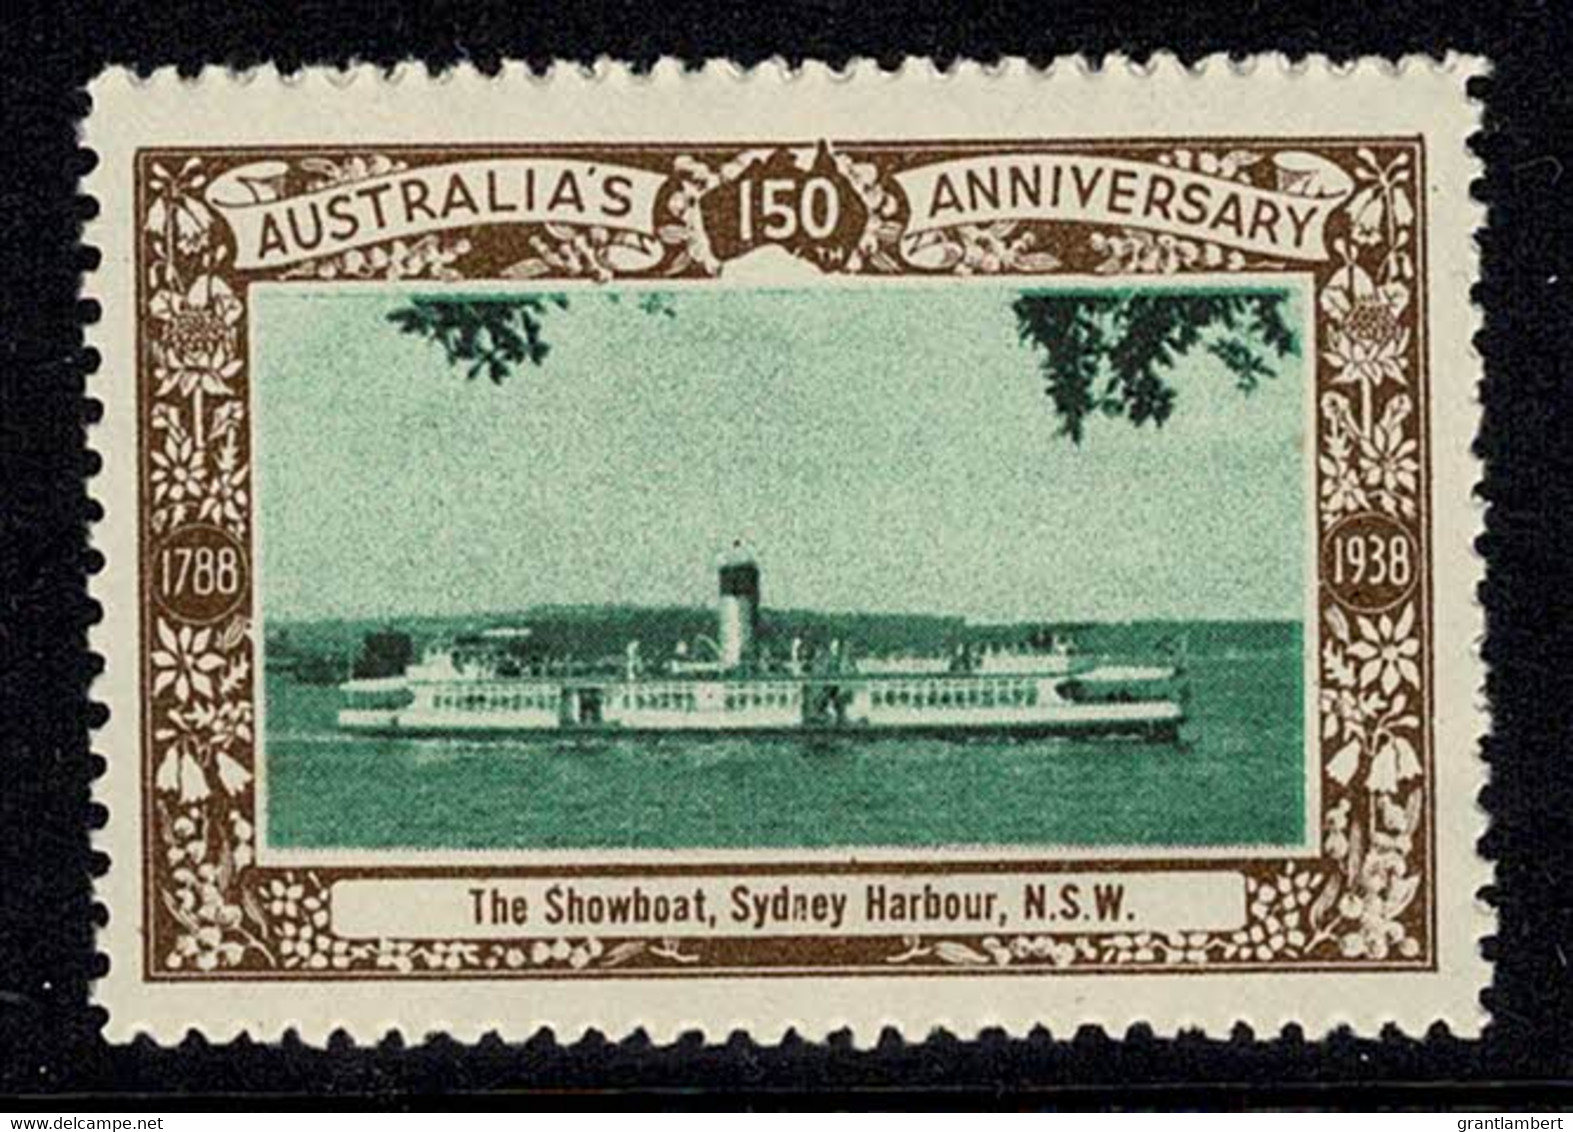 Australia 1938 The Showboat, Sydney Harbour - NSW 150th Anniversary Cinderella MNH - Cinderellas